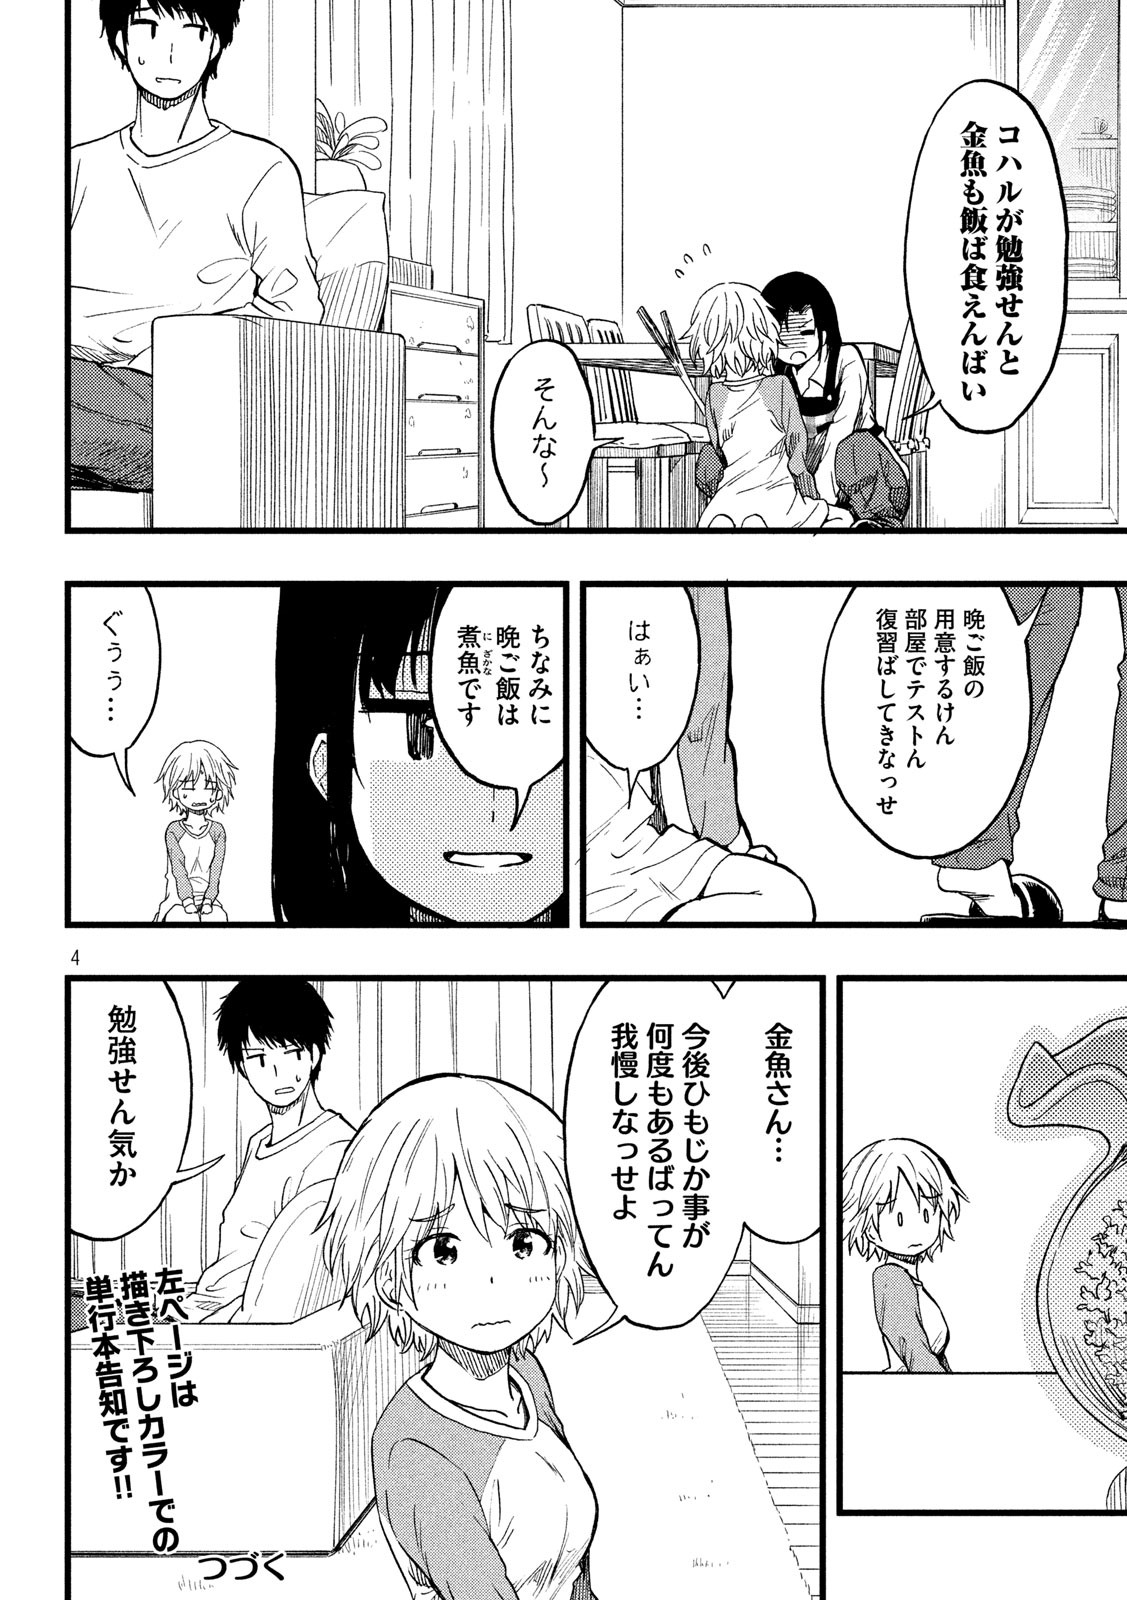 Koharu haru! - Chapter 47 - Page 4